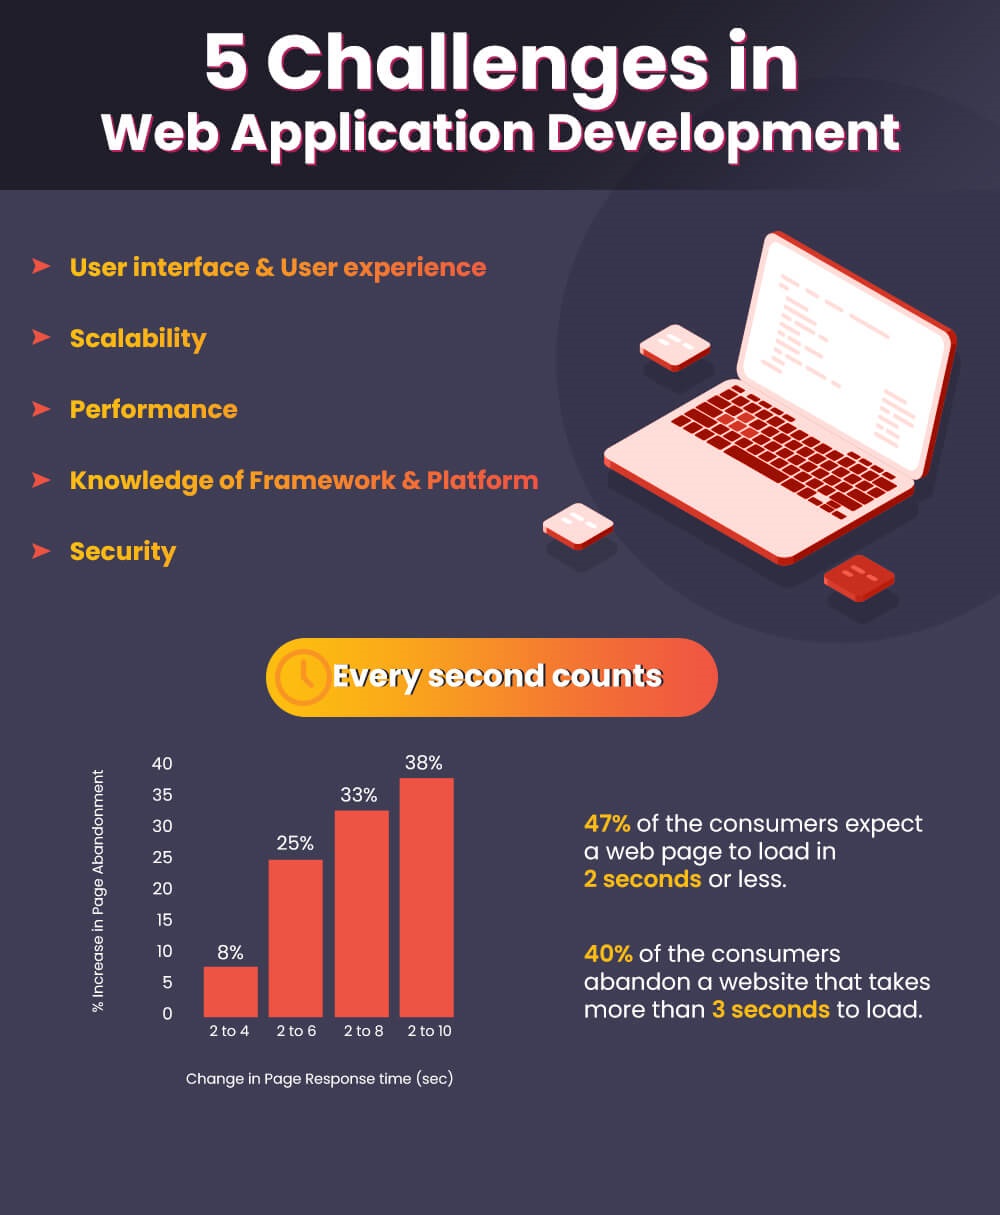 Challenges in Web Application Development